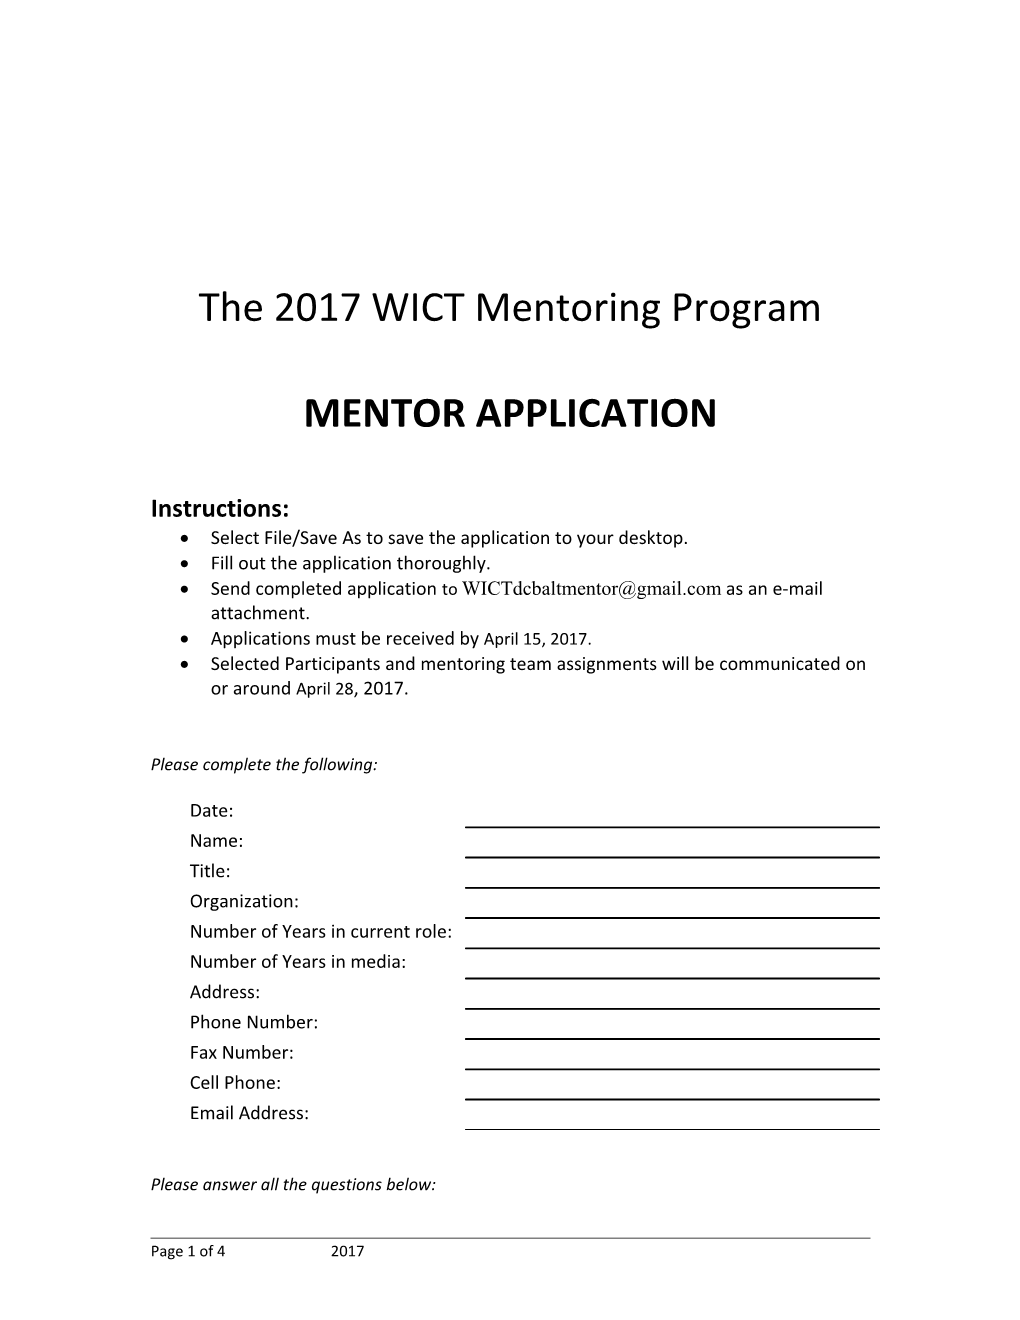 The 2017 WICT Mentoring Program